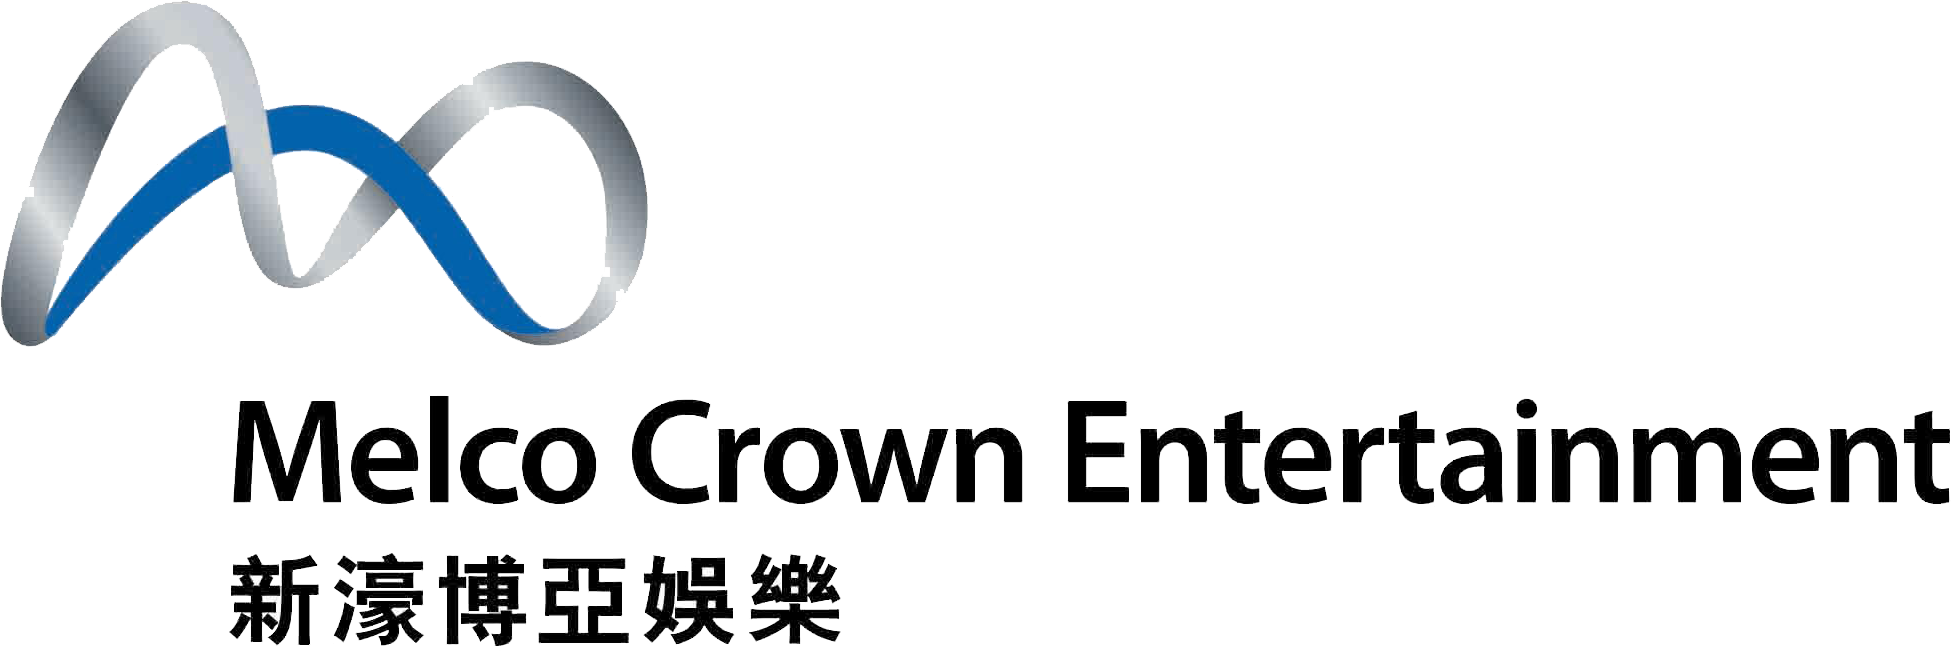 30Melco-Crown-Entertainment-logo.png